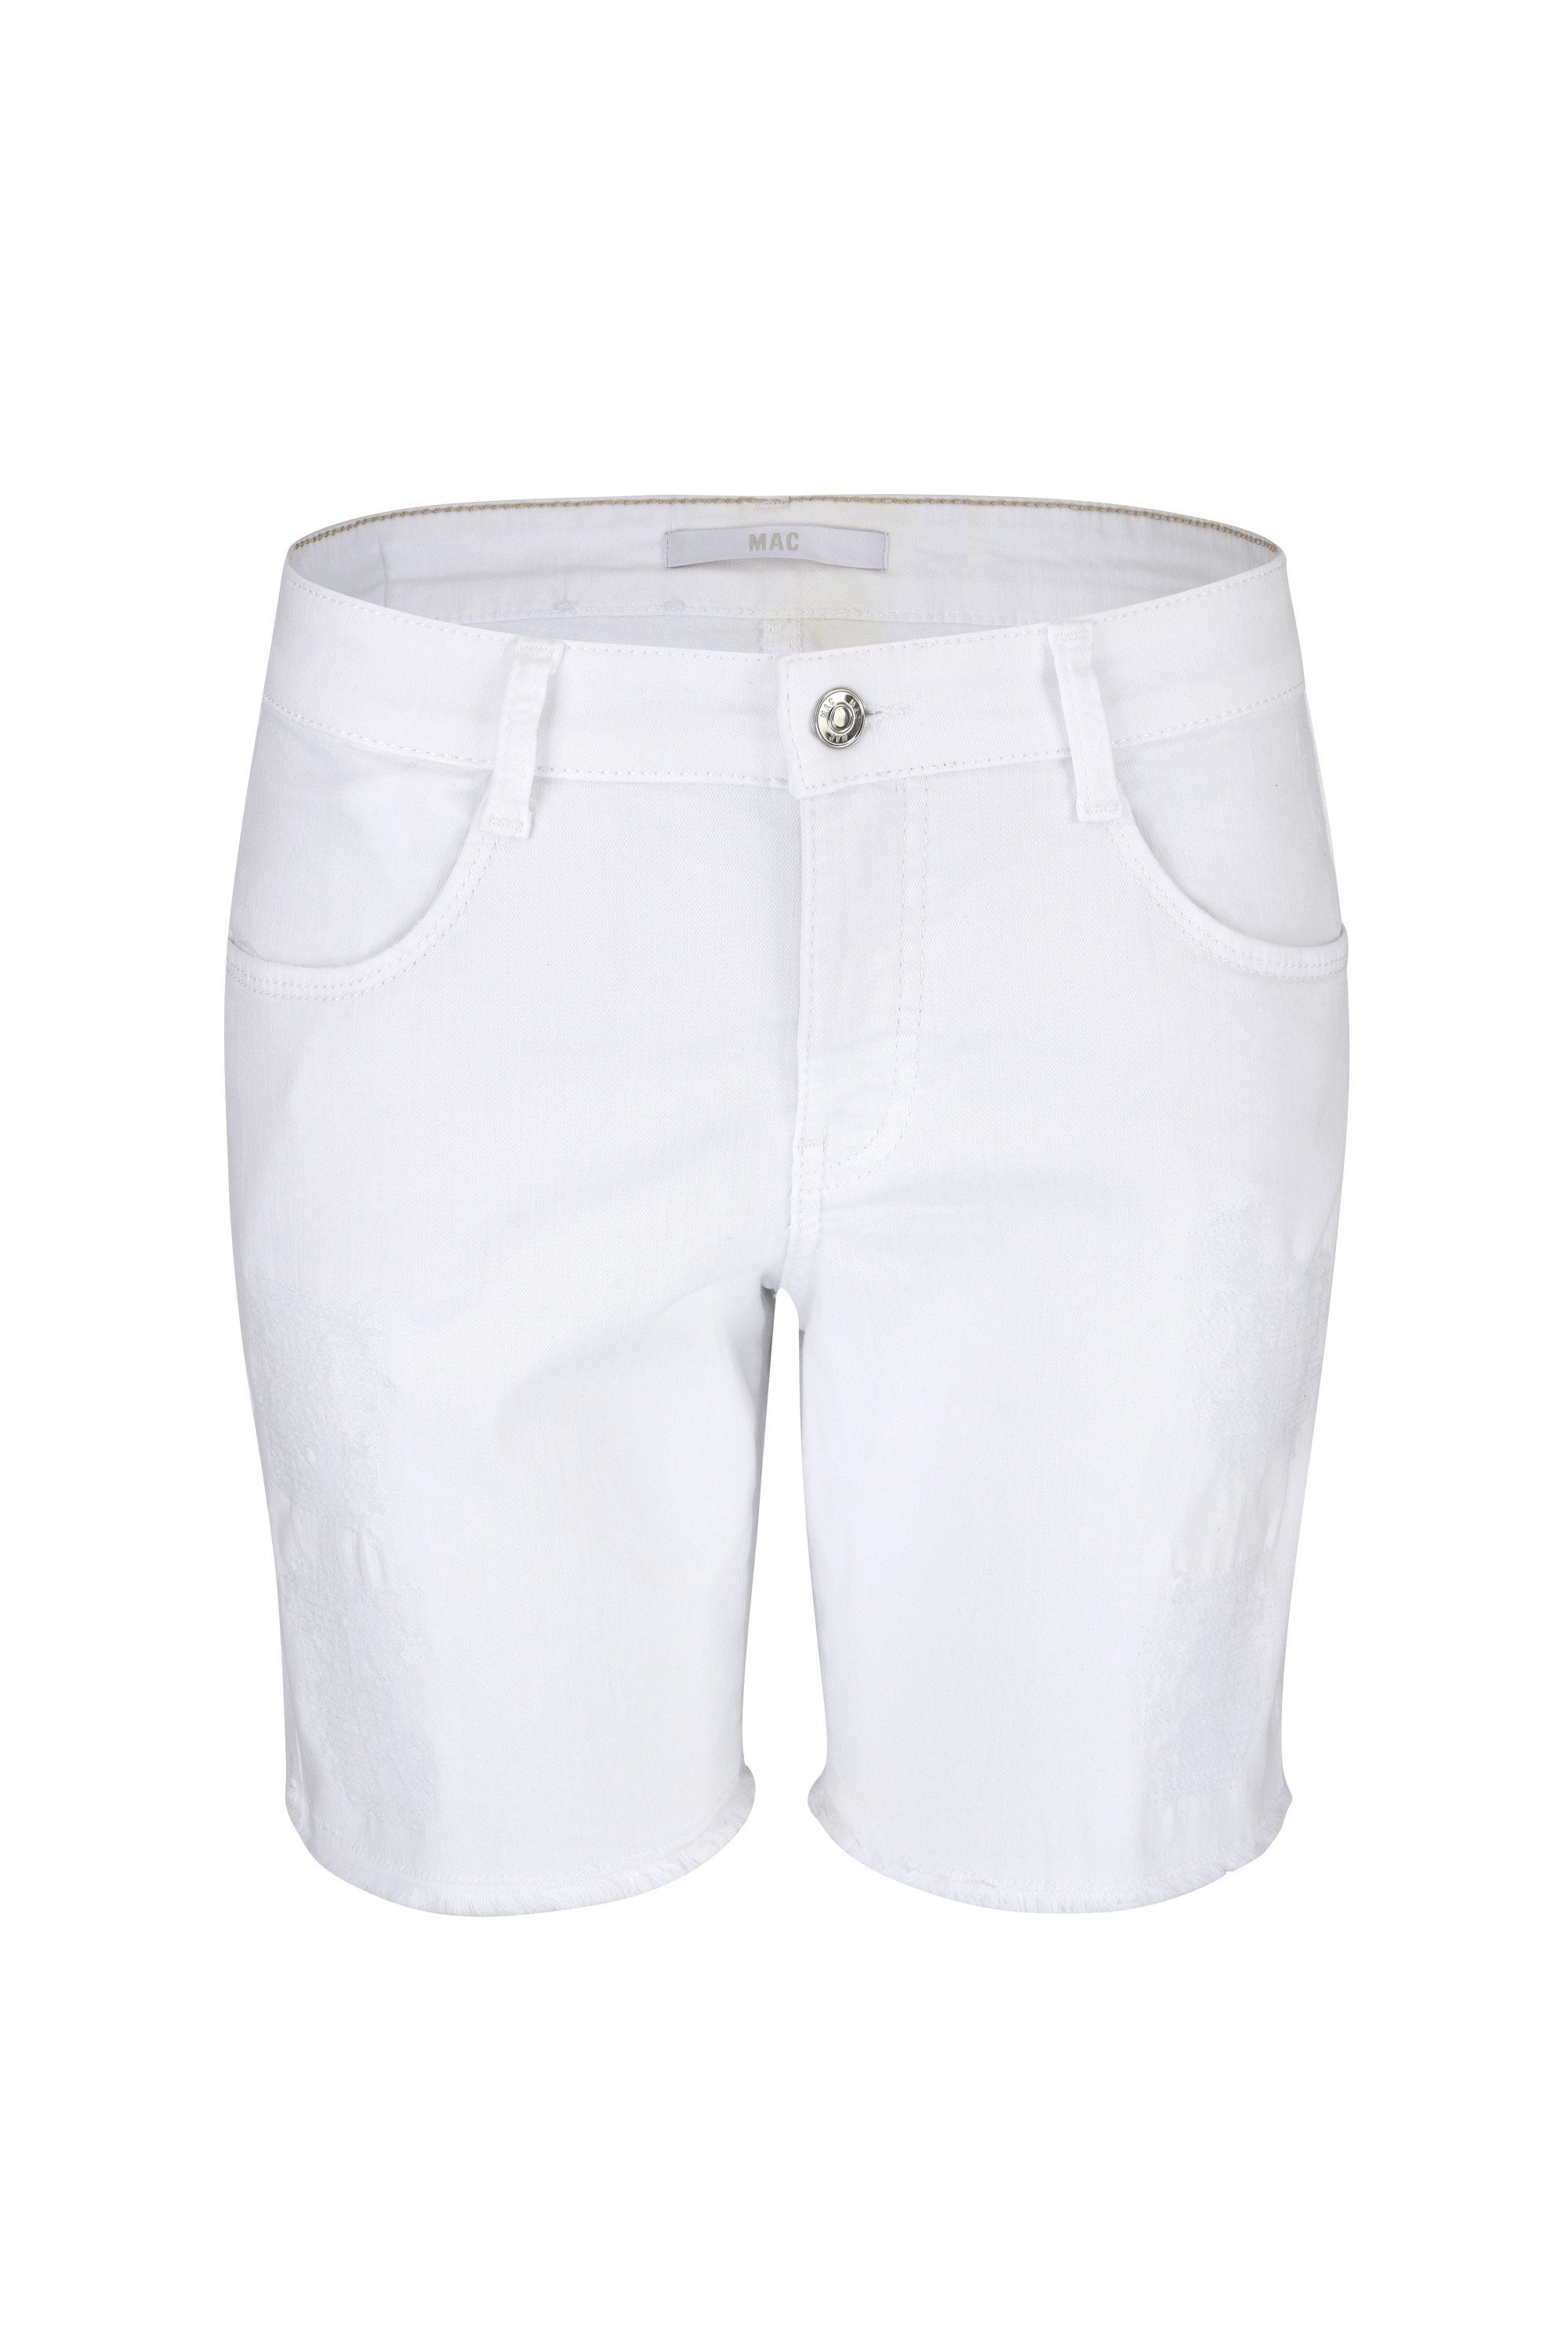 Damen Jeans MAC Stretch-Jeans MAC SHORTY summer fringe white destroy wash 2389-9